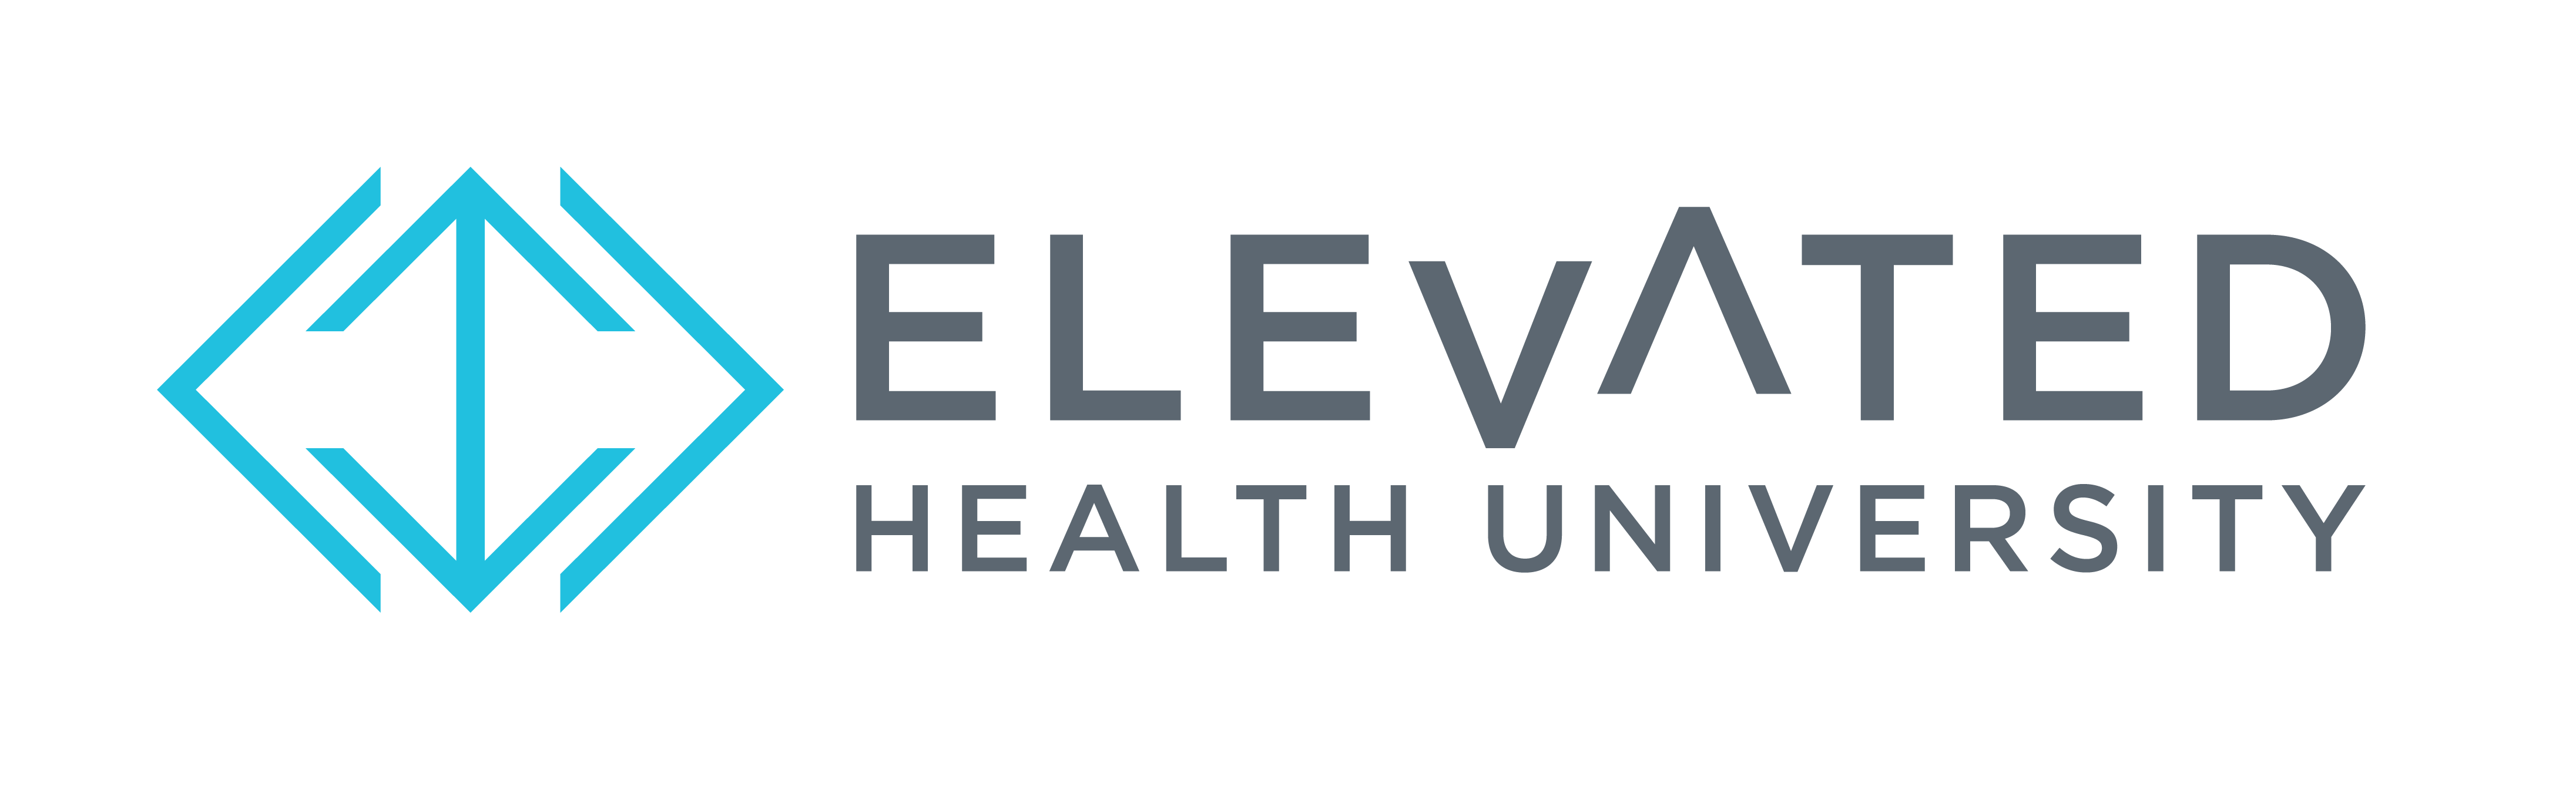 Elevated Health University